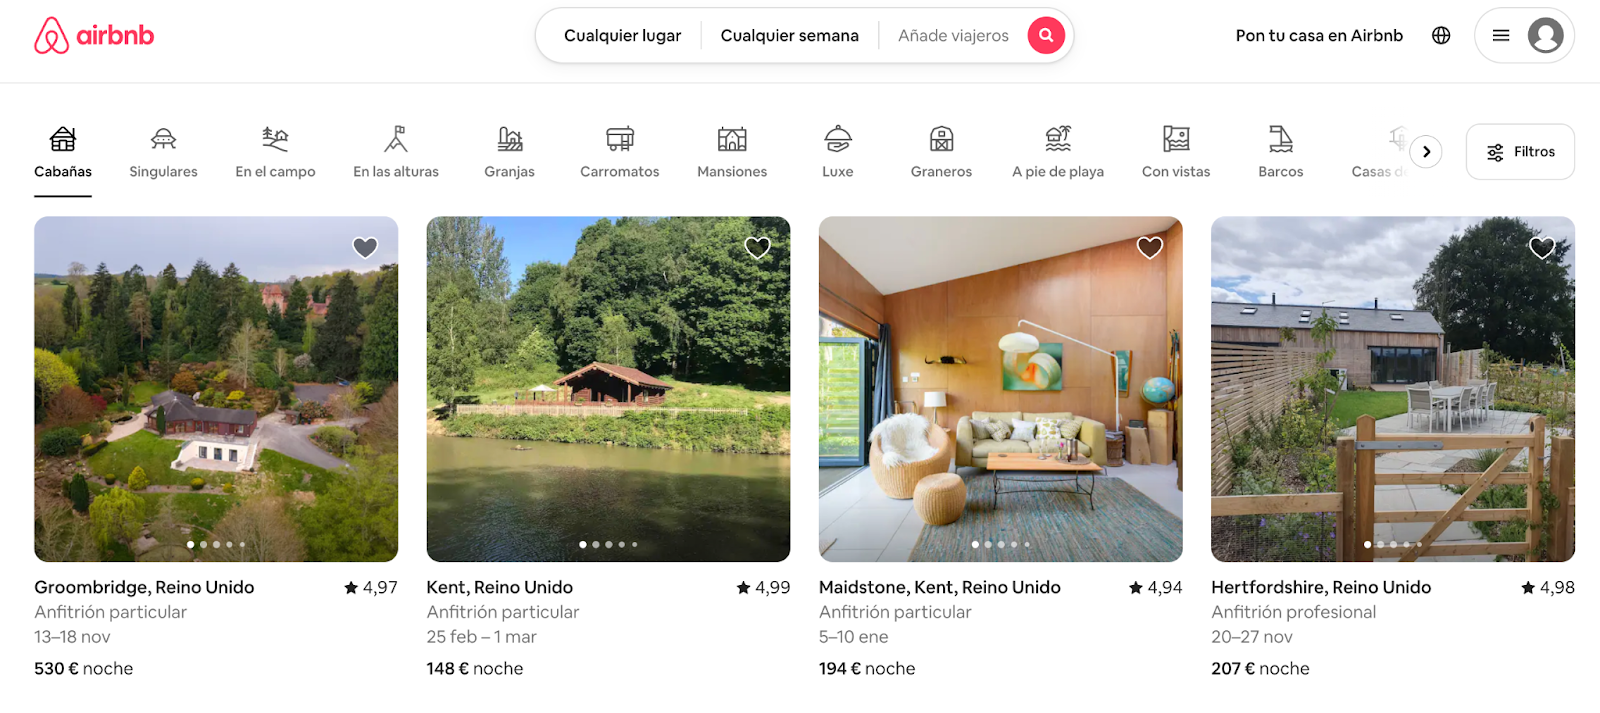 Página web Airbnb